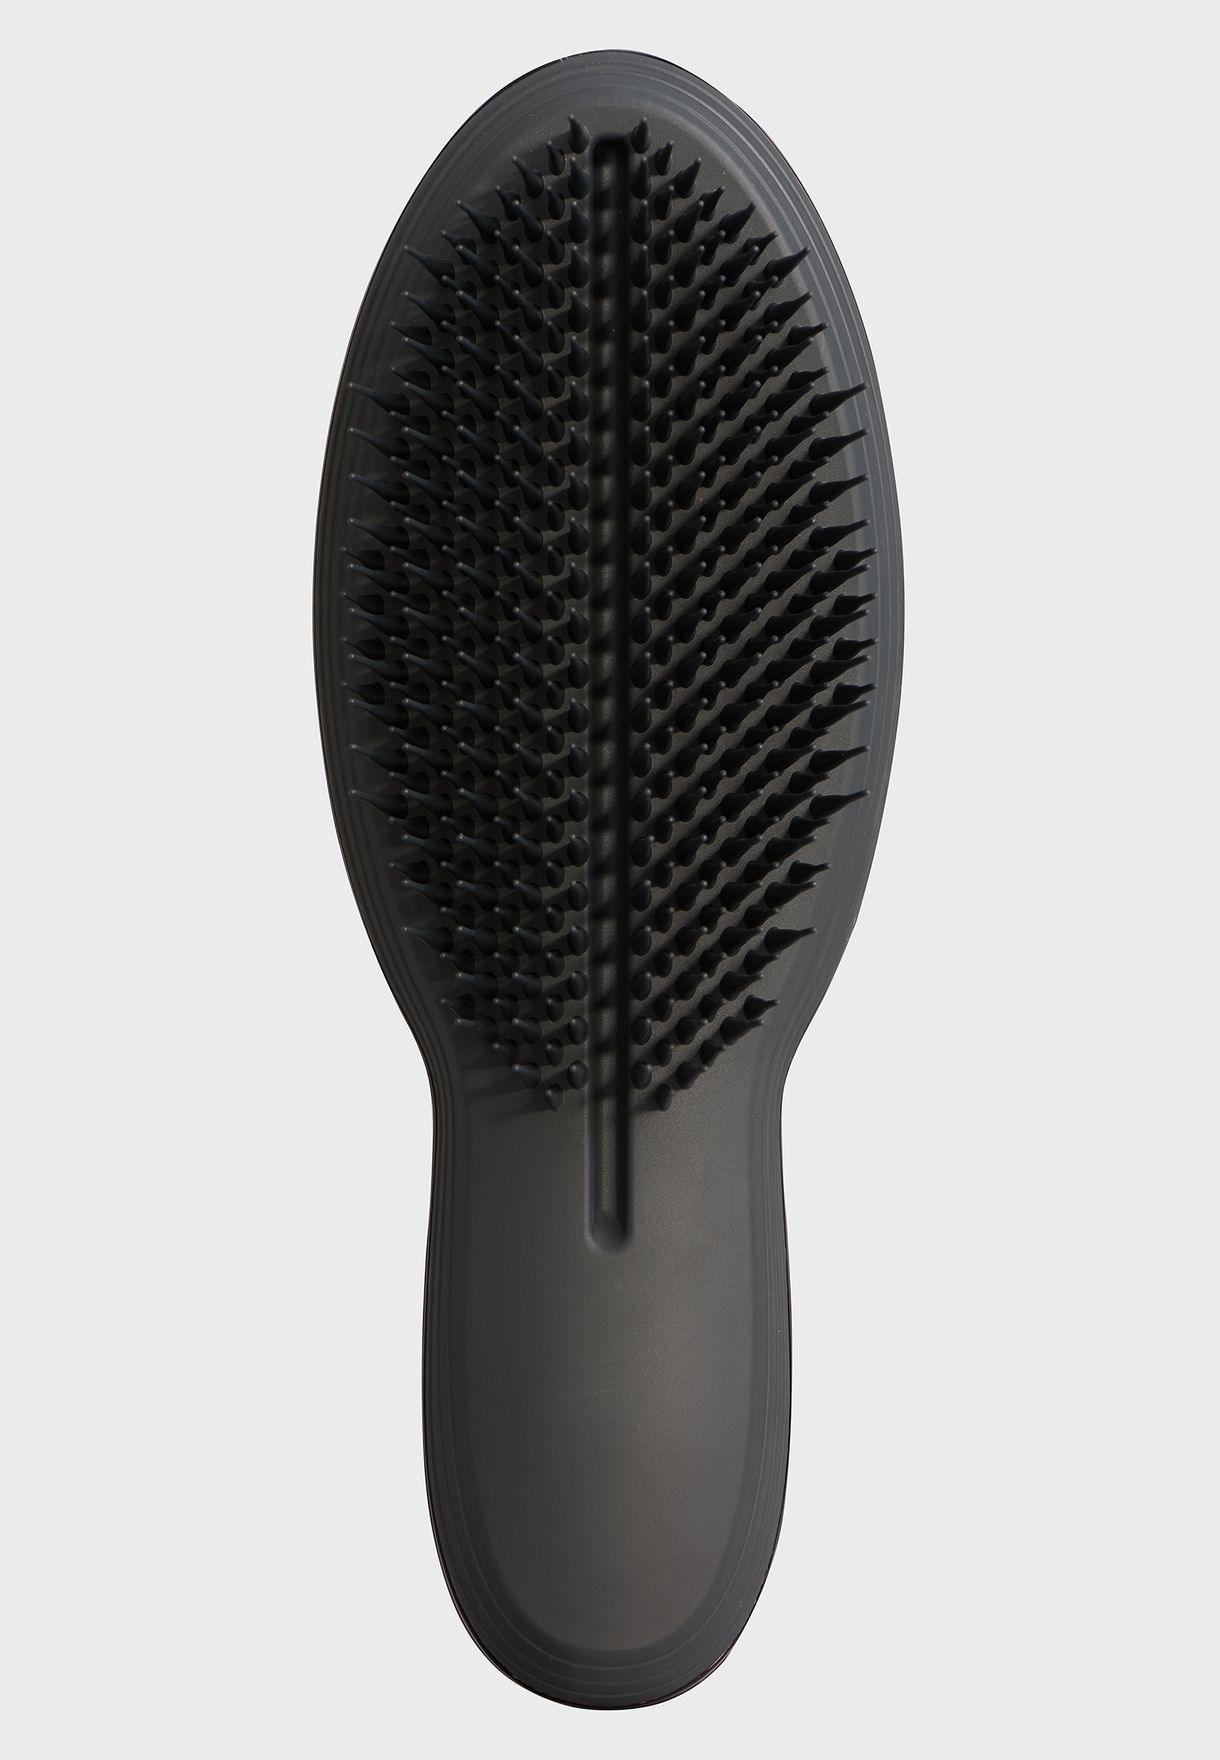 Ultimate Hair Brush - Black